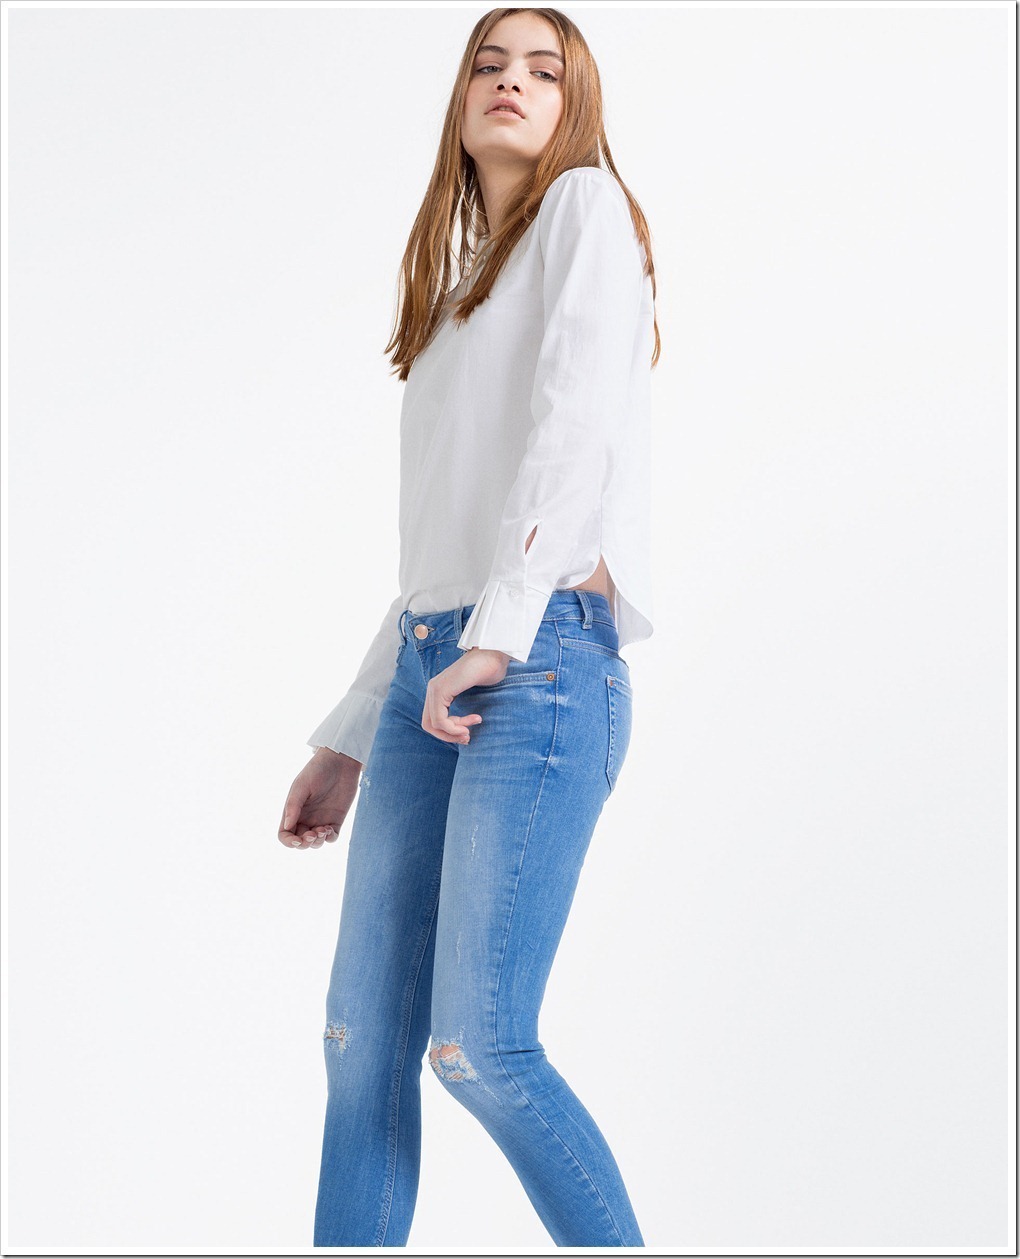 SS16 Denim styles from Zara : Zara Collection - Denim Jeans | Trends ...